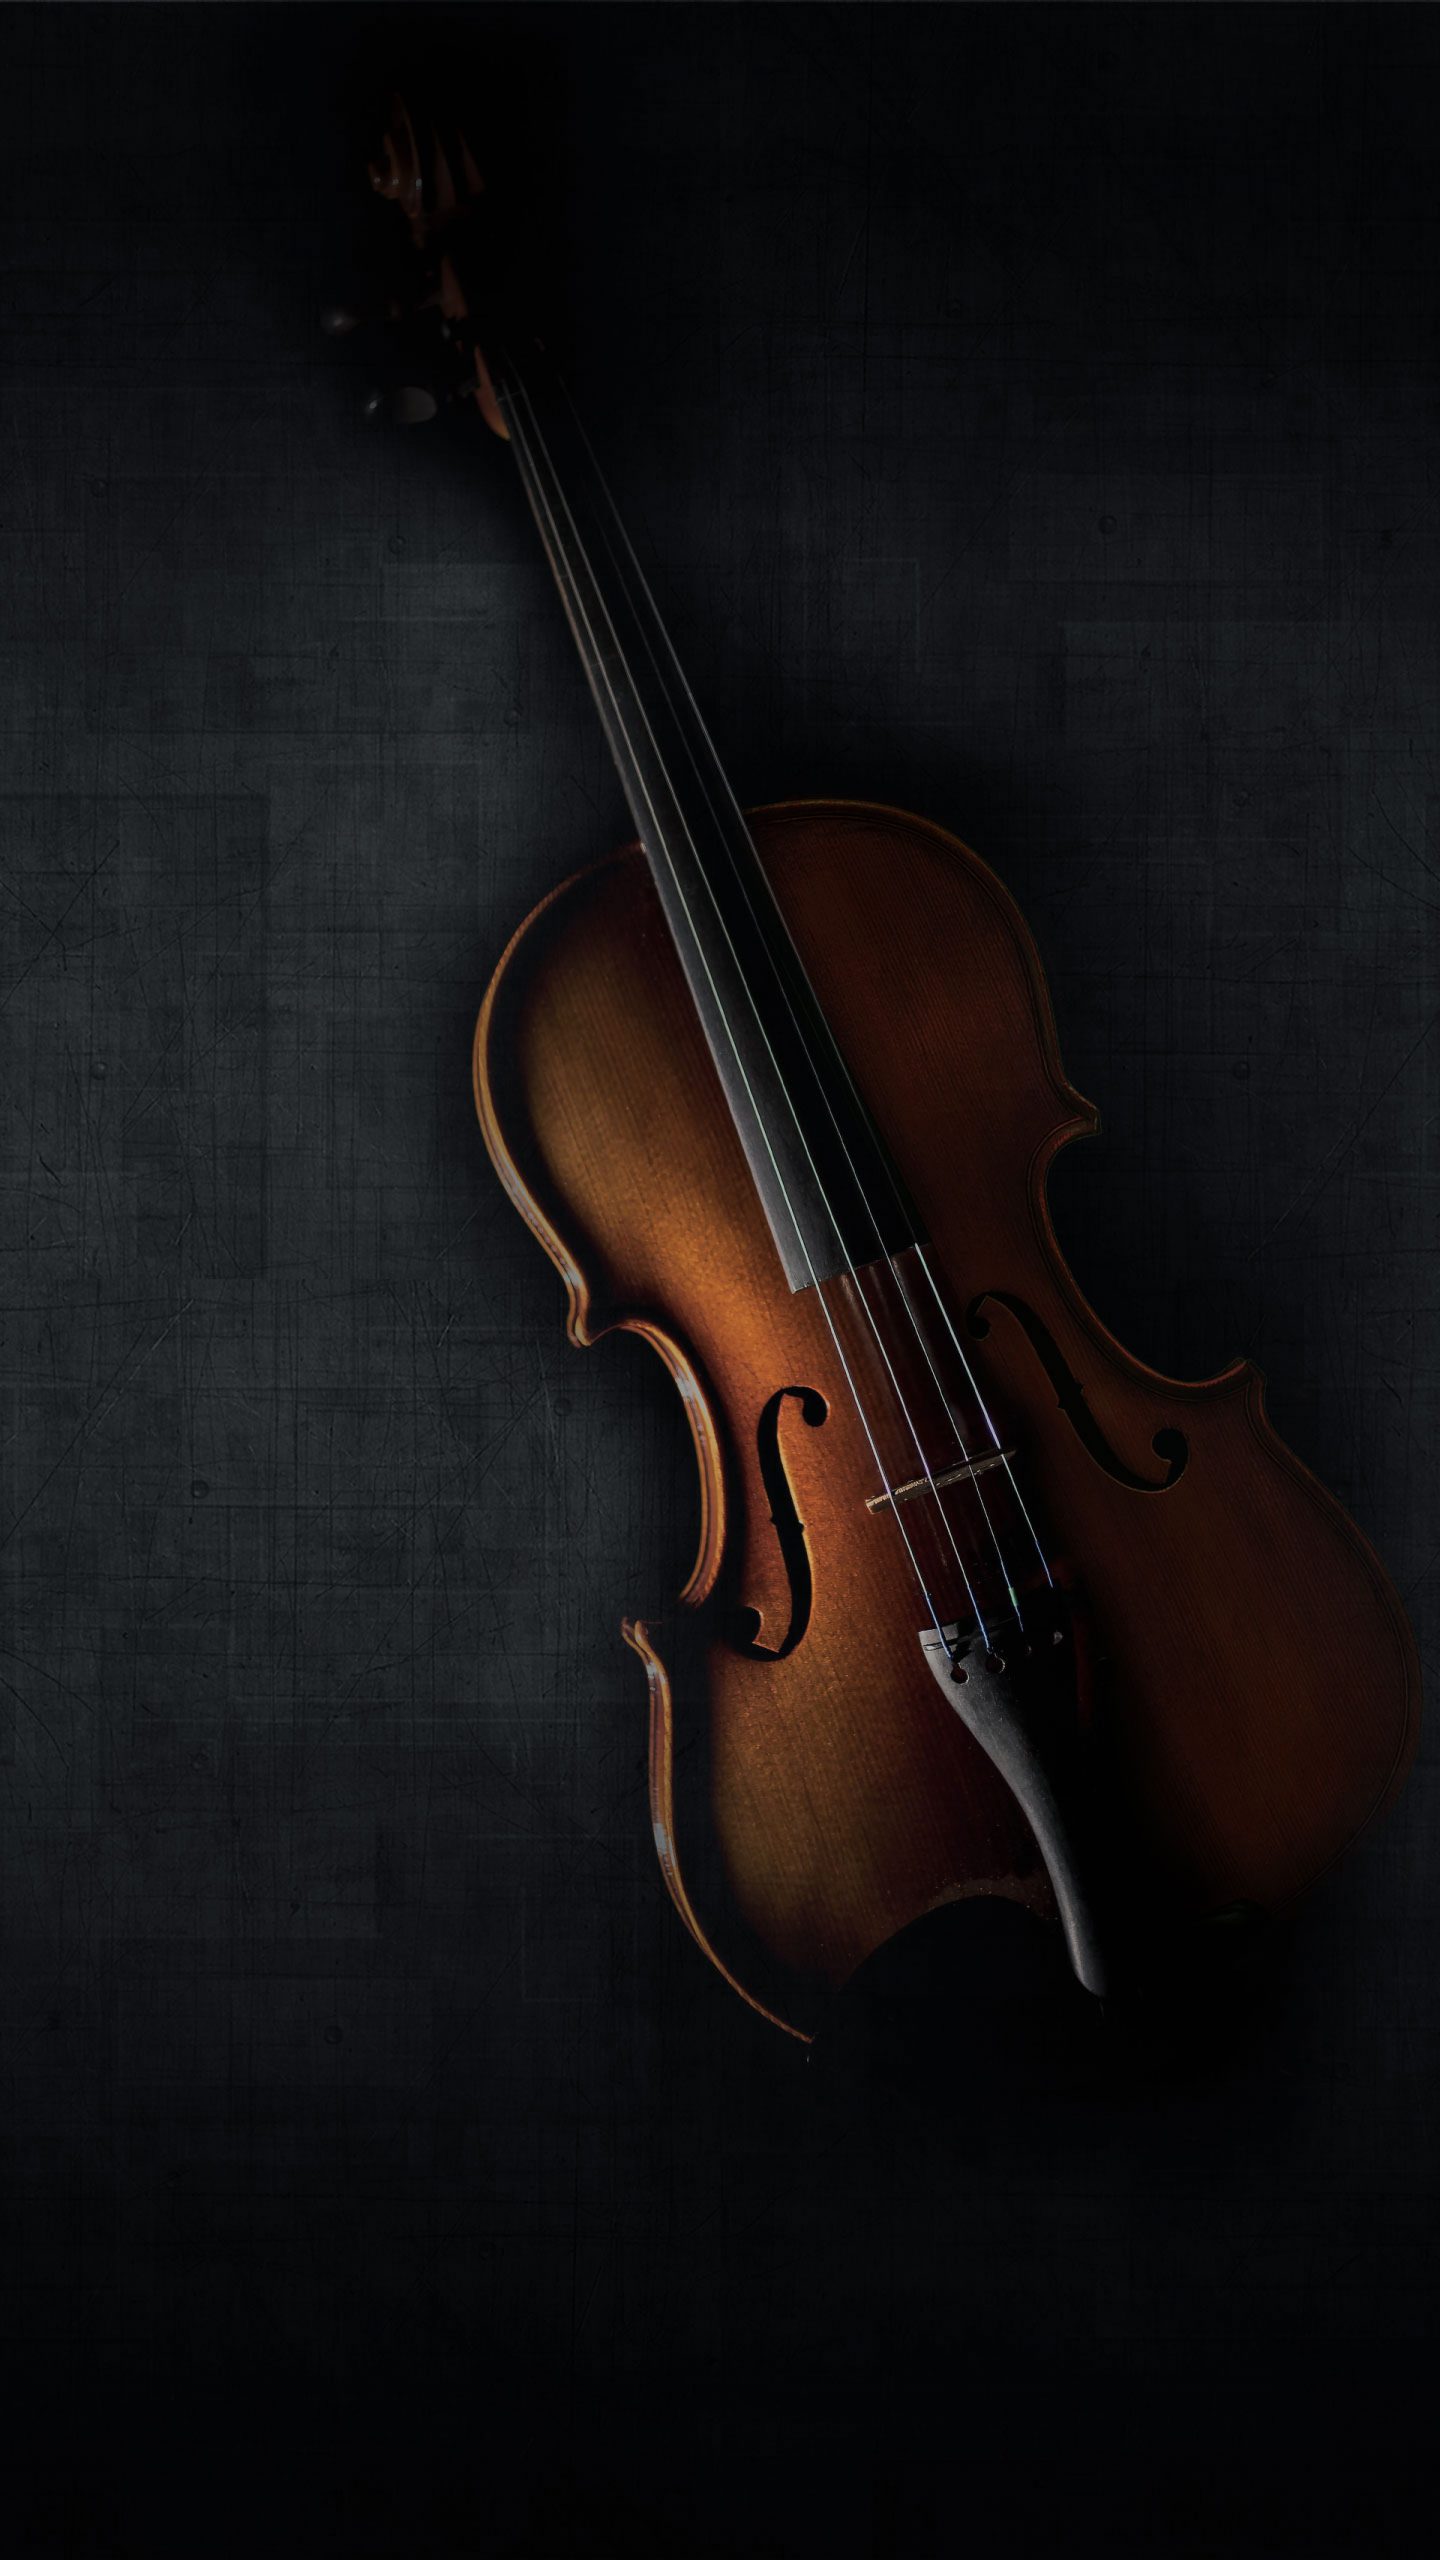 Violin Wooden Music Instrument 4k Wallpaper Best